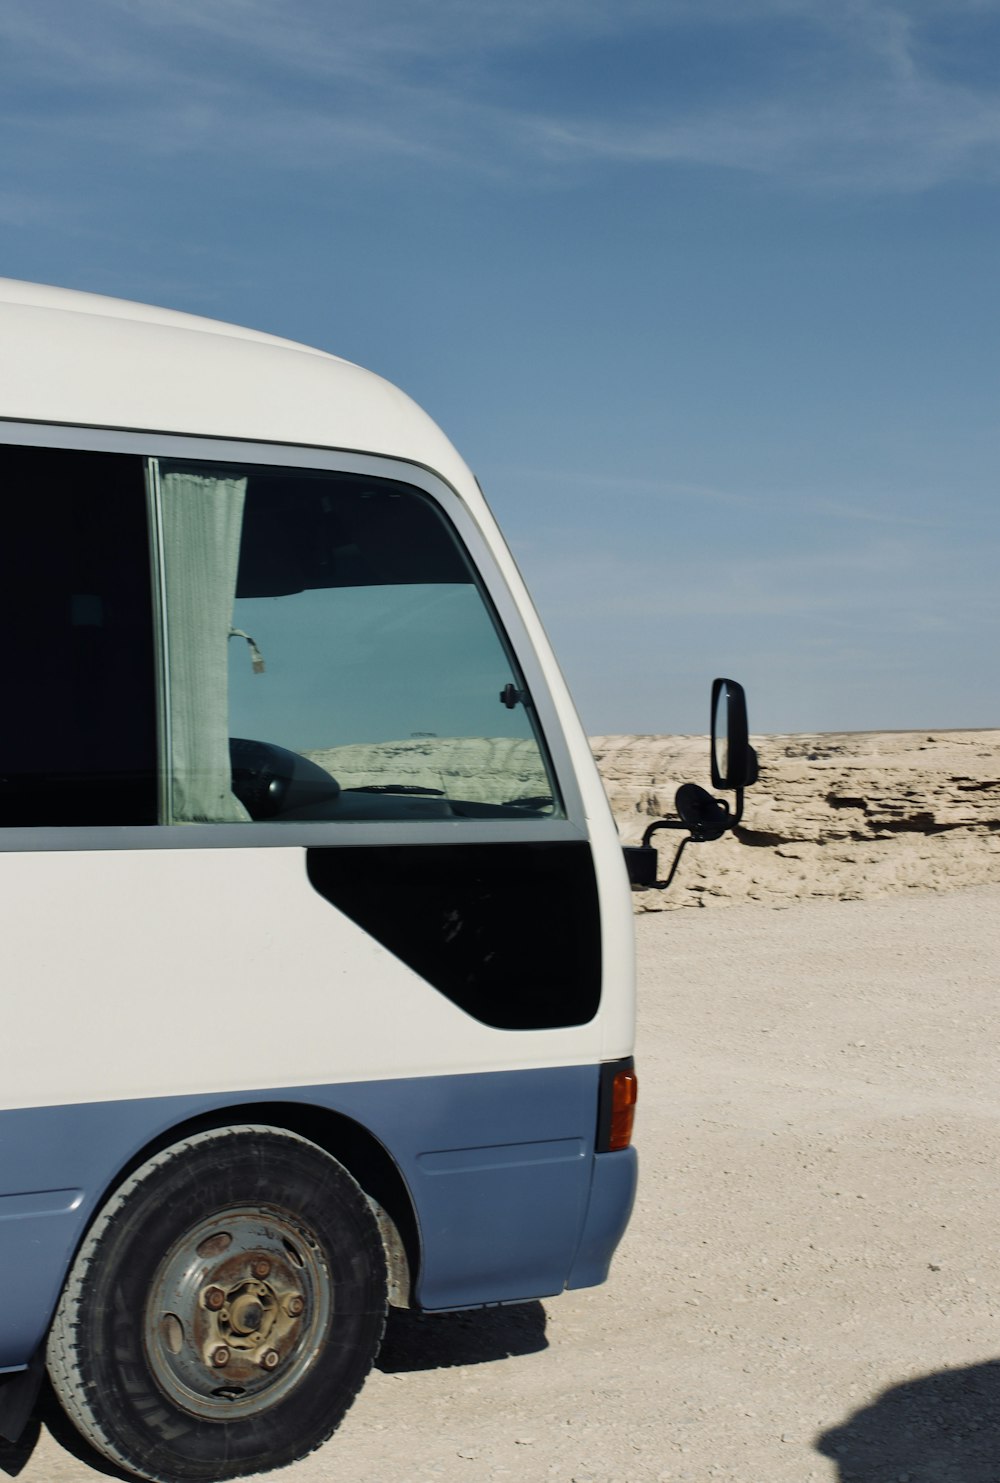 a white van parked on a sandy beach